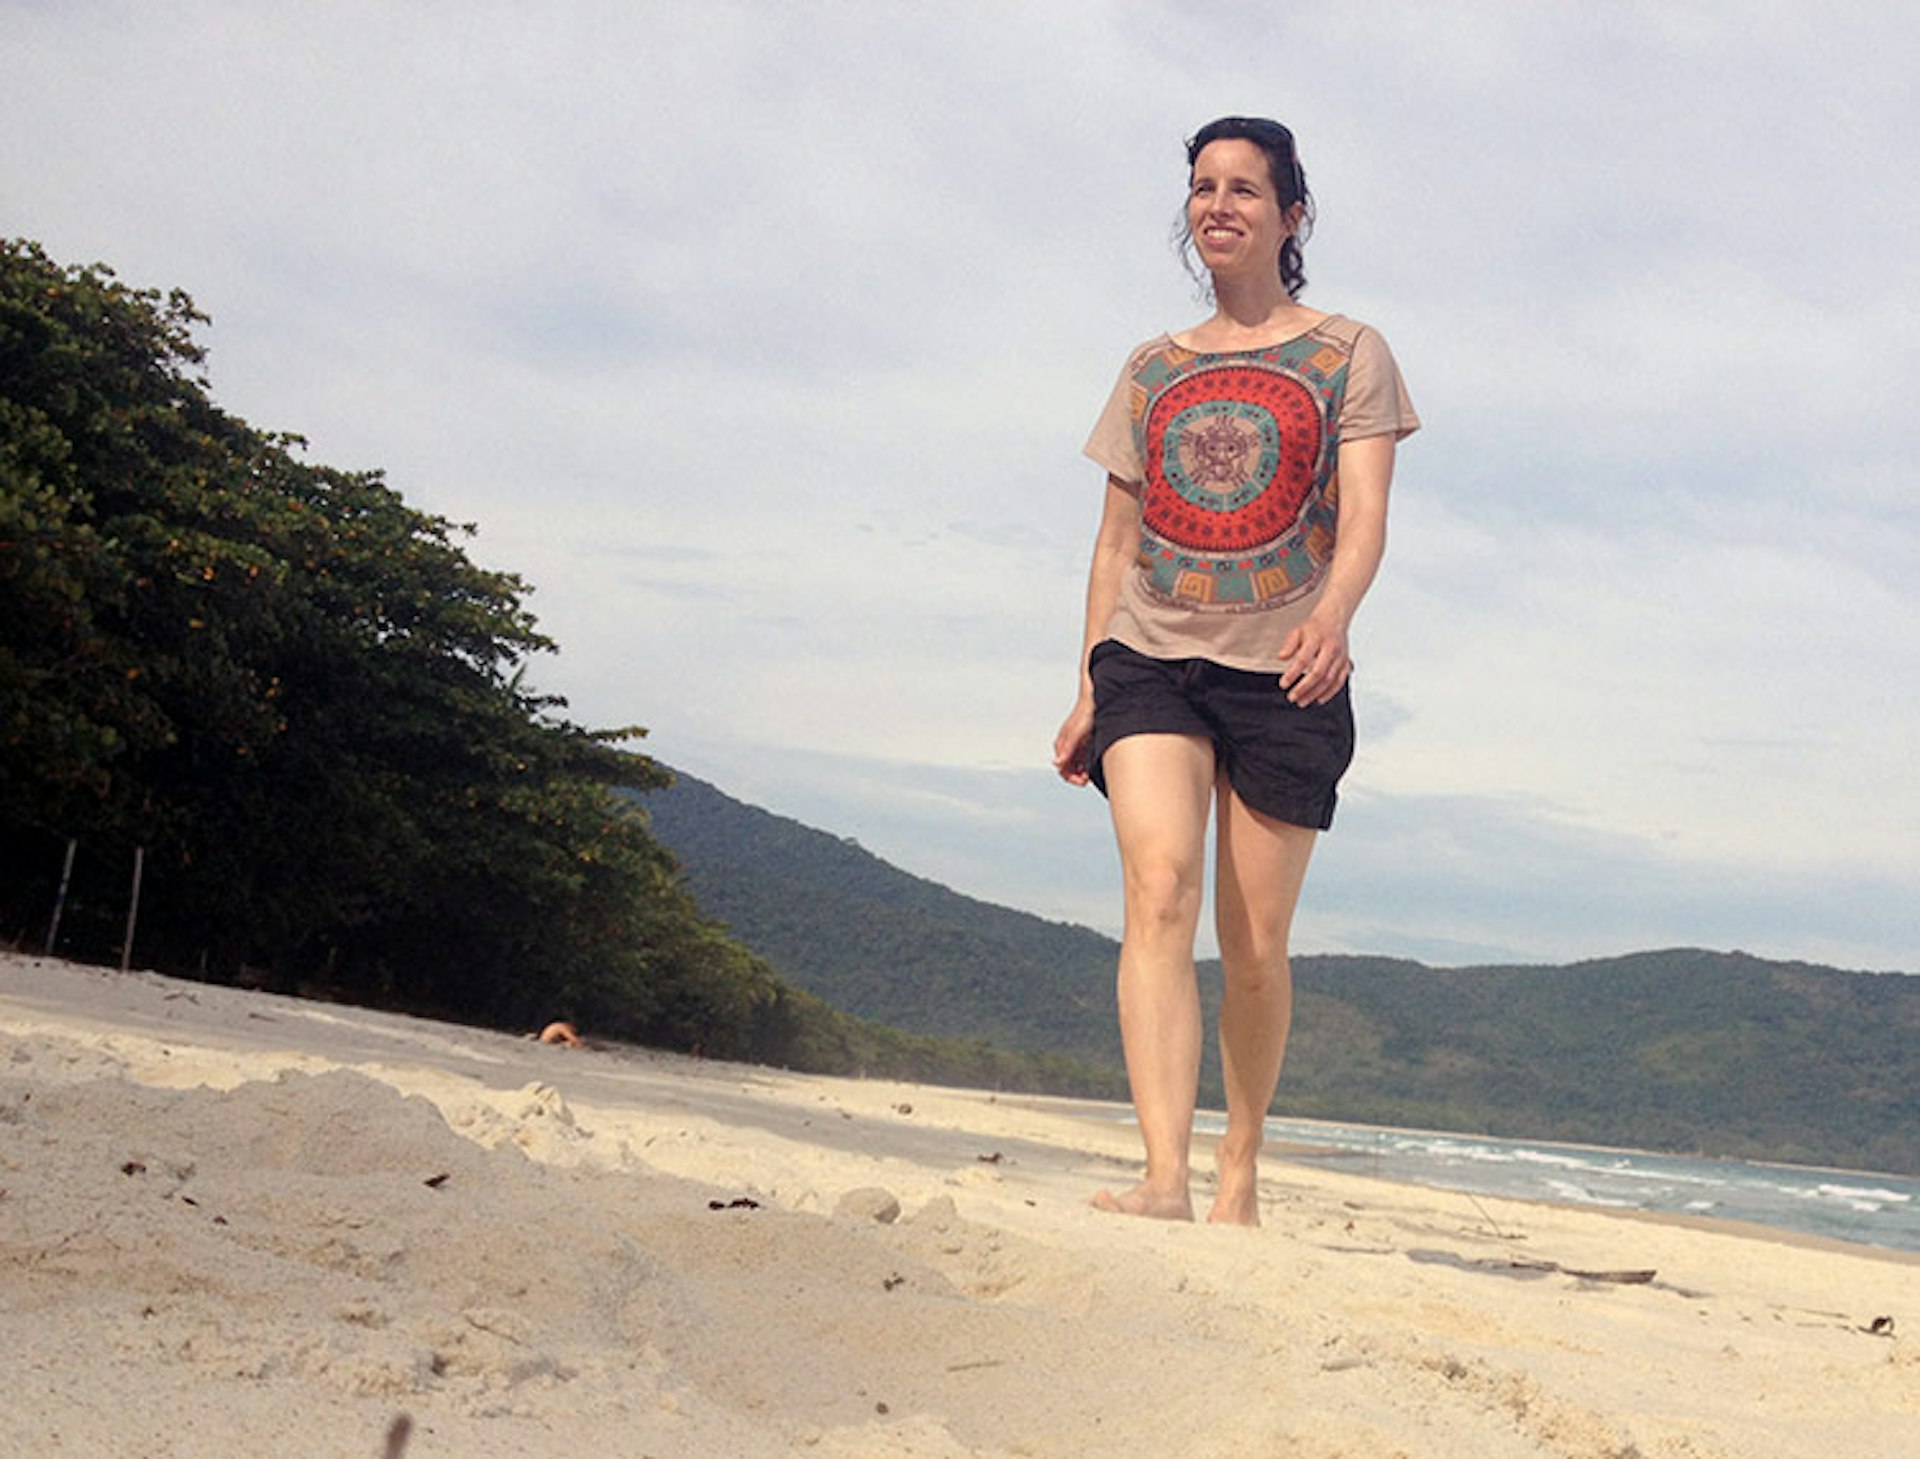 A woman wearing shorts and a t-shirt walks along a sandy beach approaching the camera